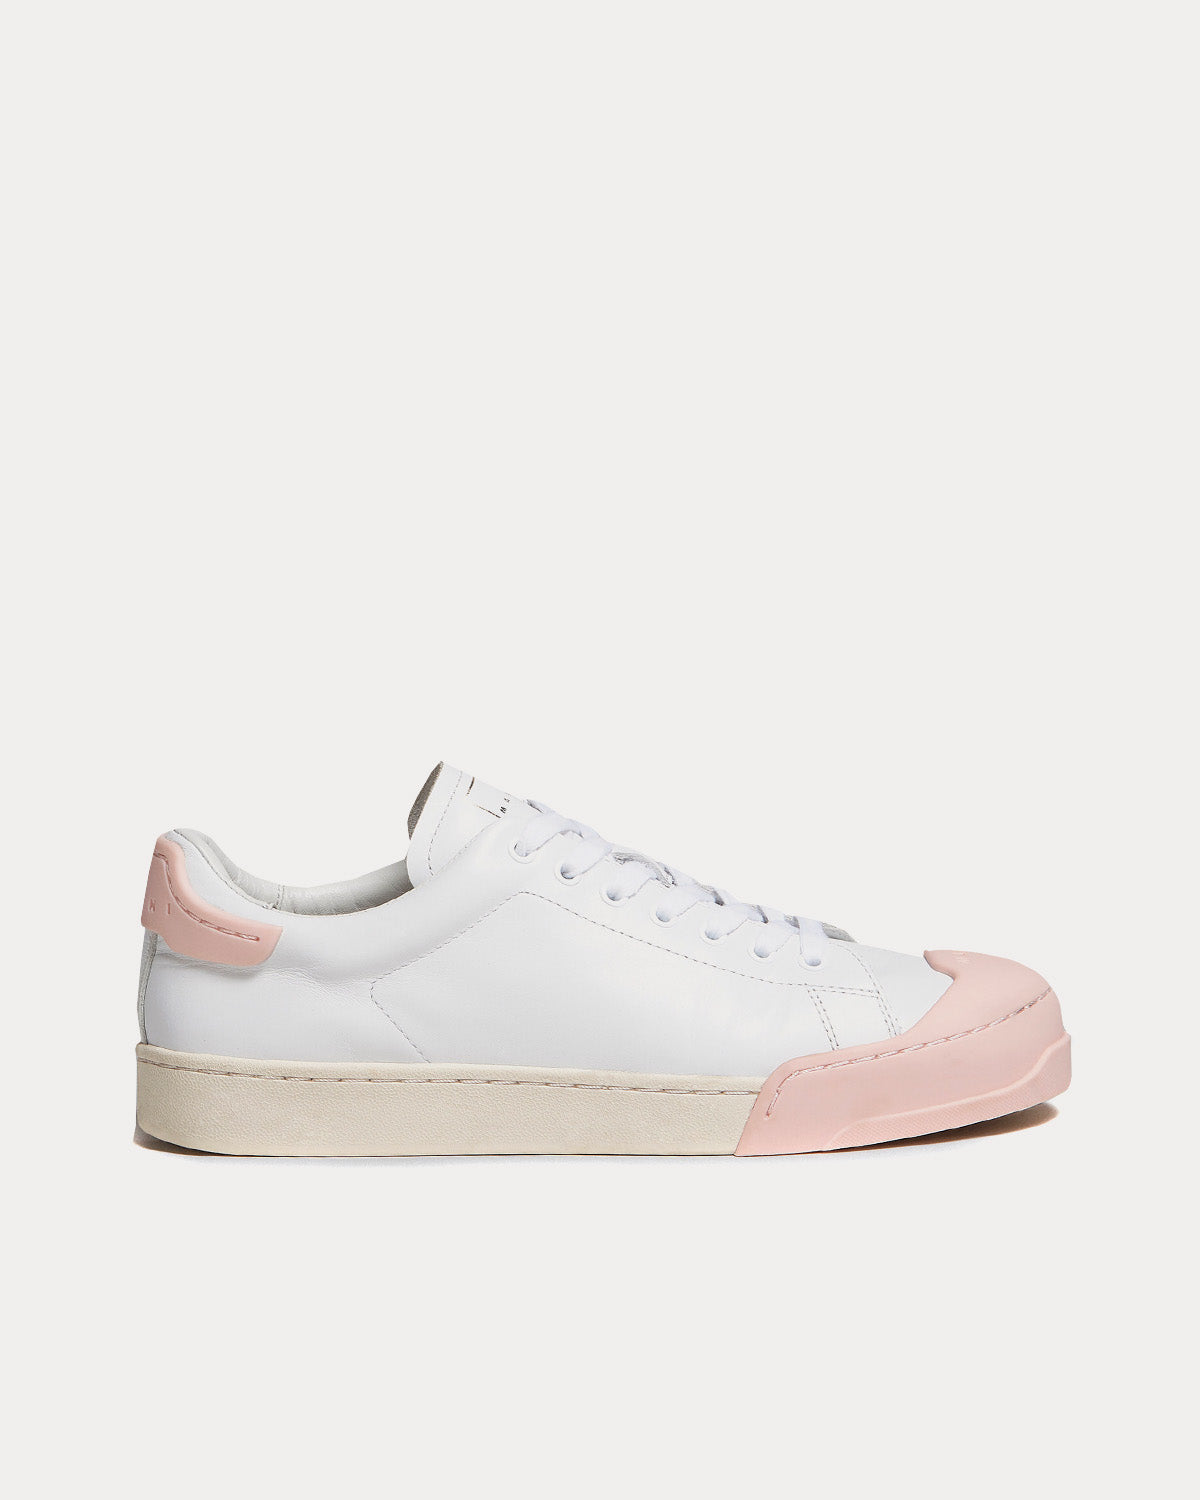 Marni - Dada Bumper White / Pink Low Top Sneakers